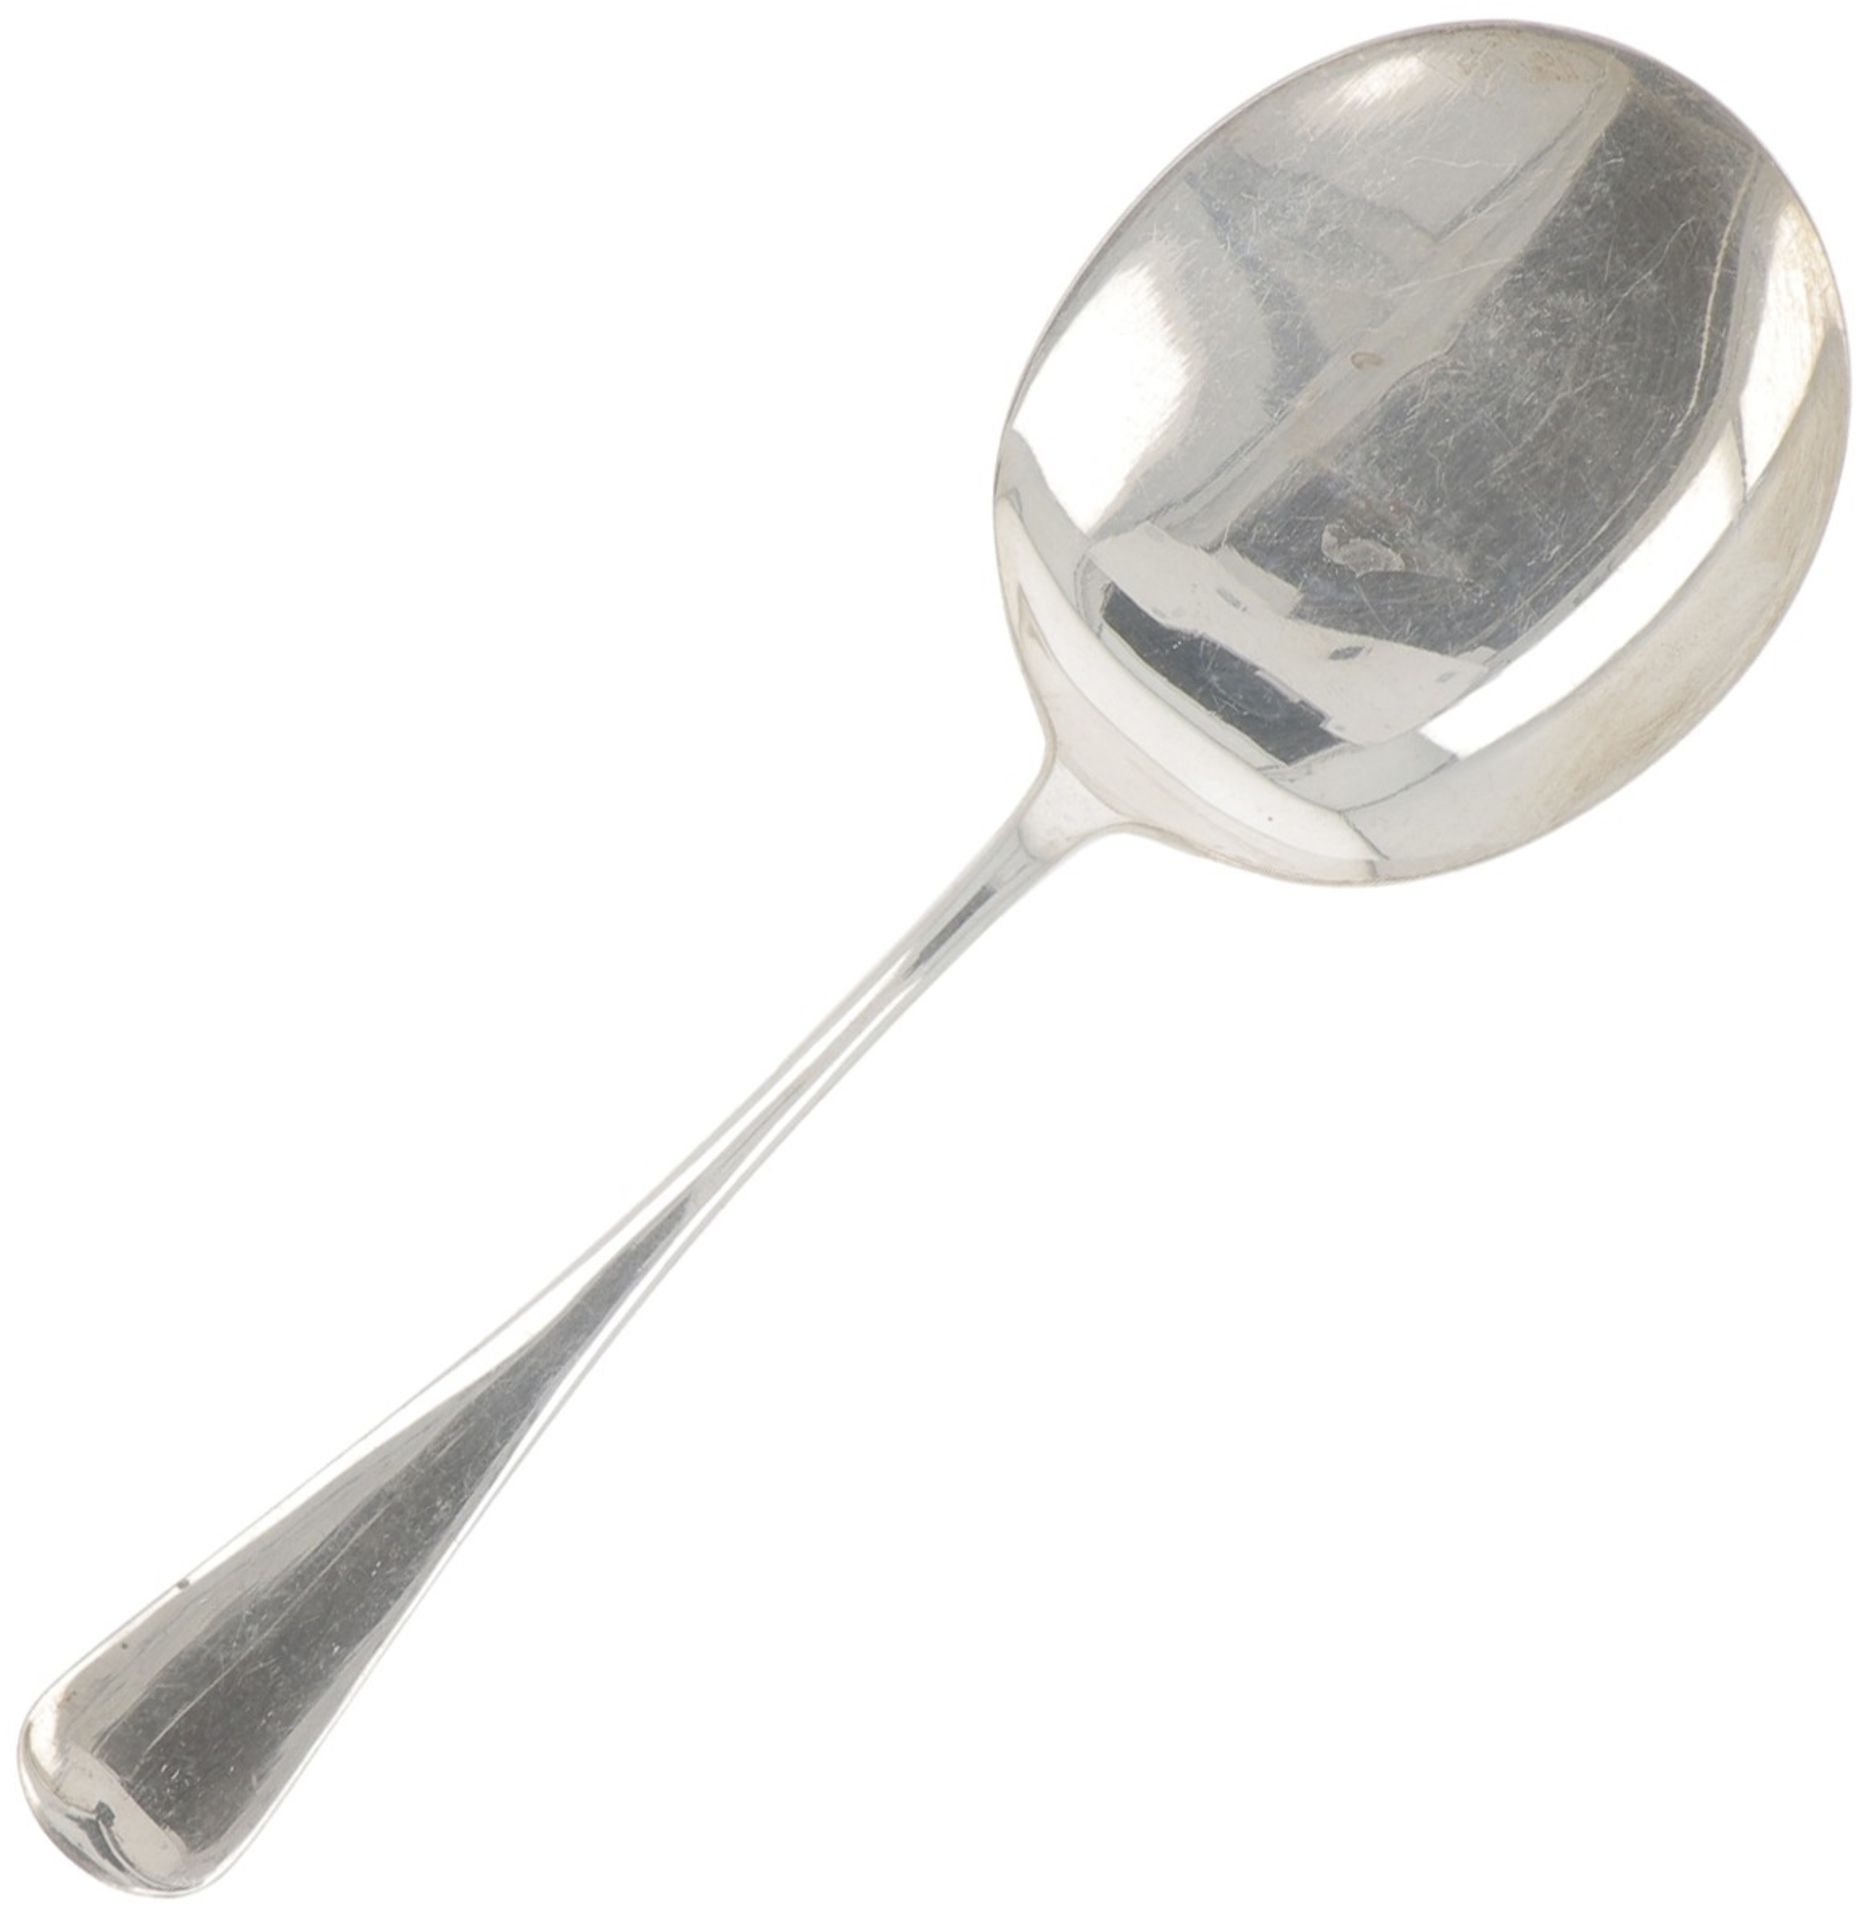 Ice cream scoop 'Haags Lofje' silver.